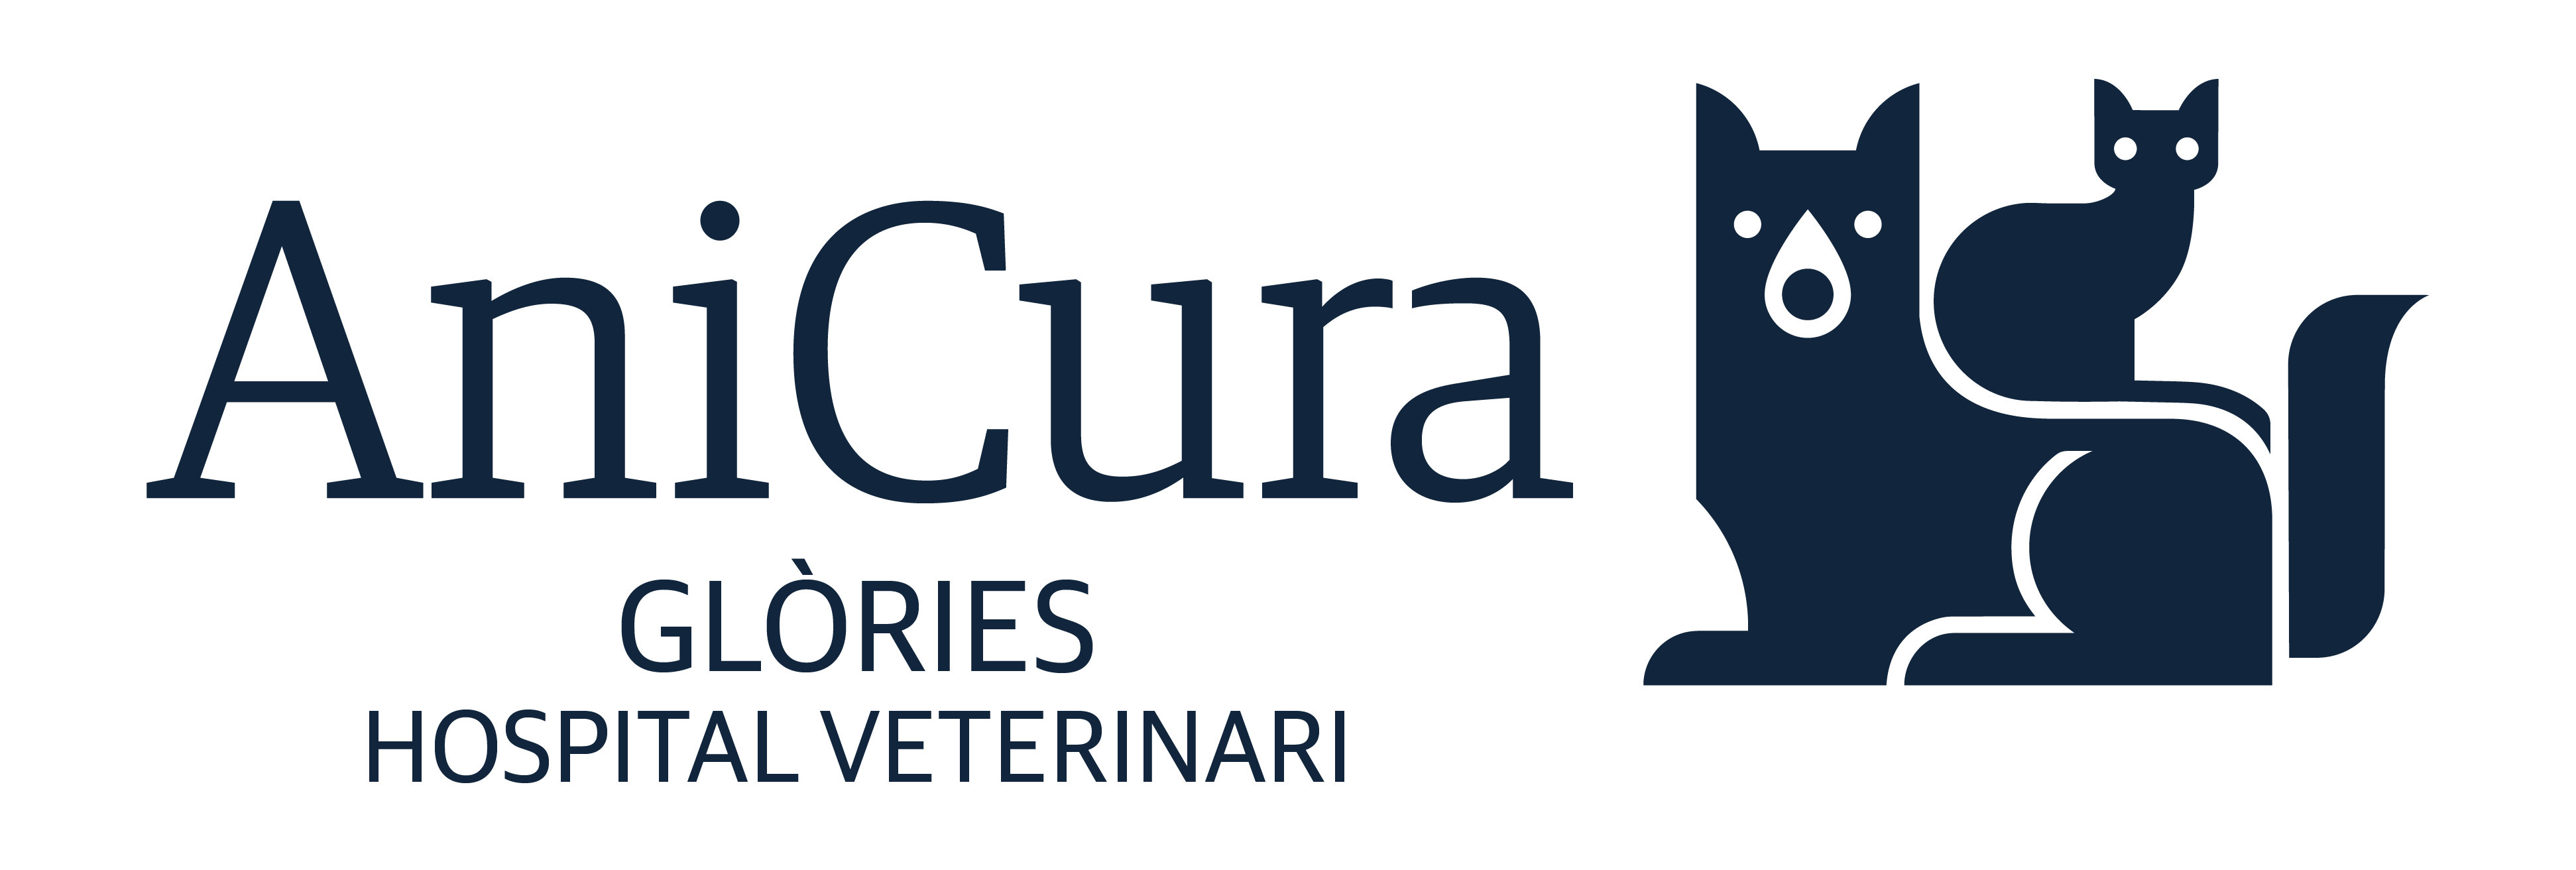 AniCura Glòries Hospital Veterinari logo